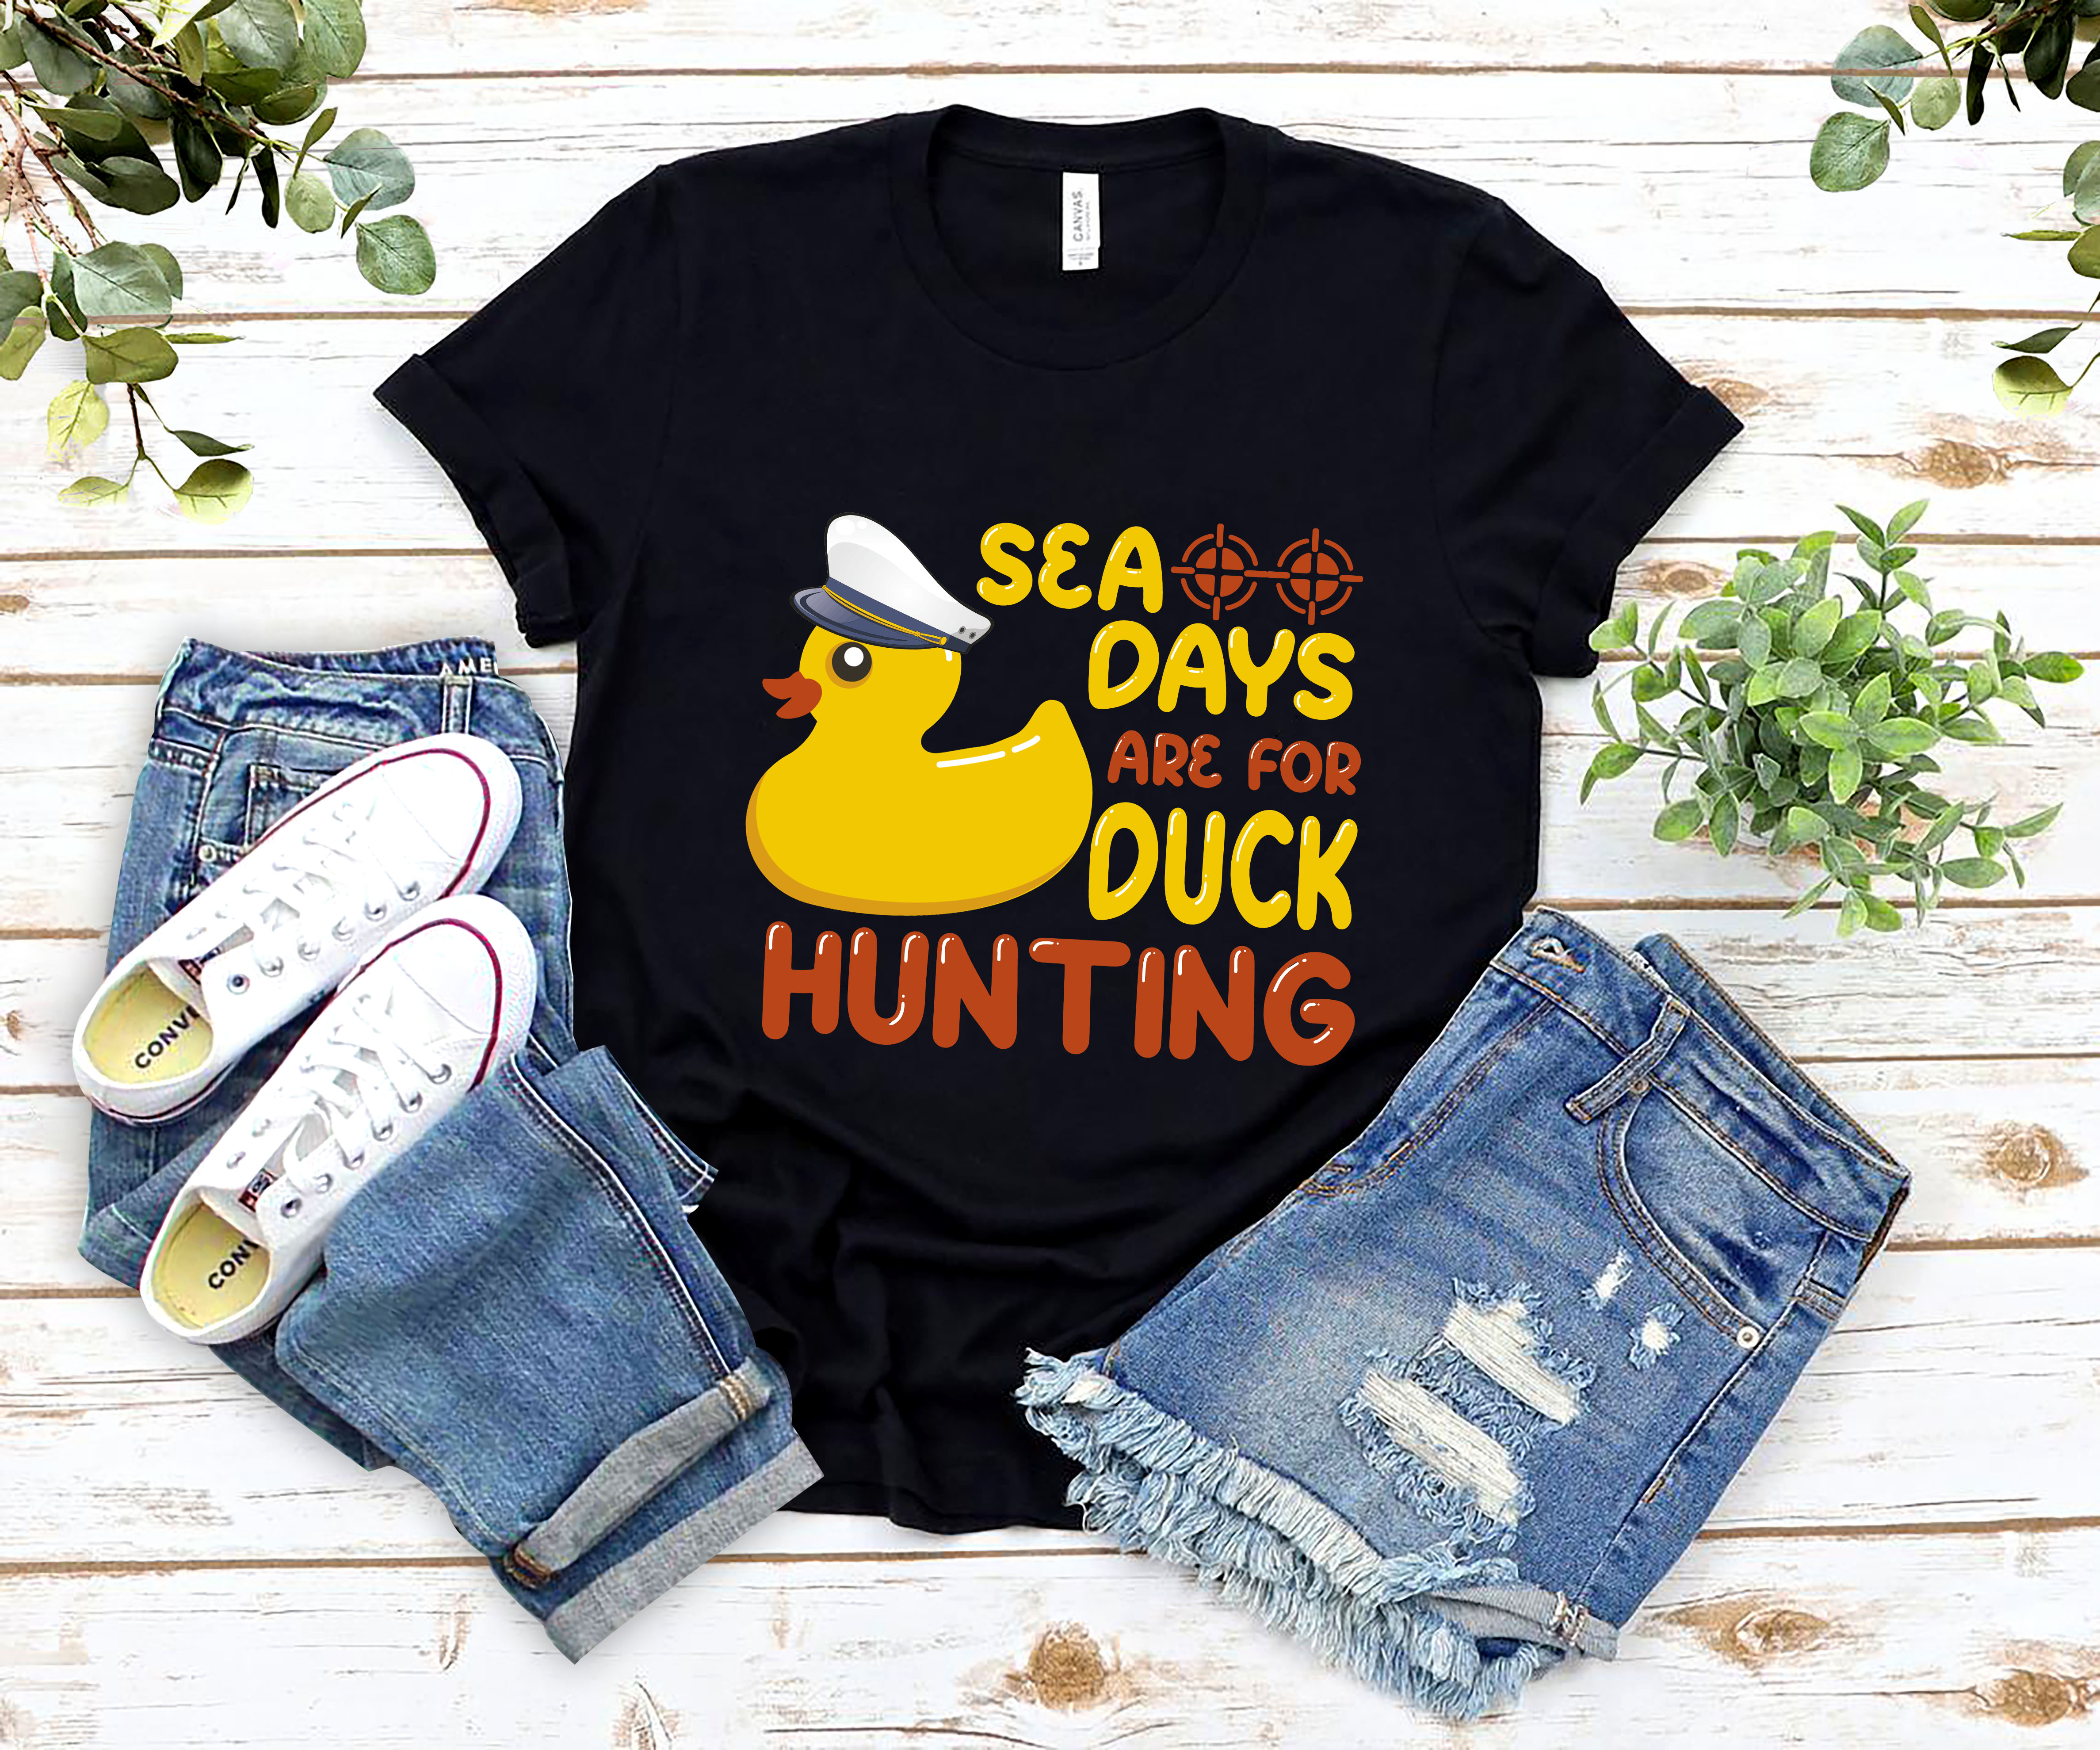 Tee Shirts for Duck Hunters